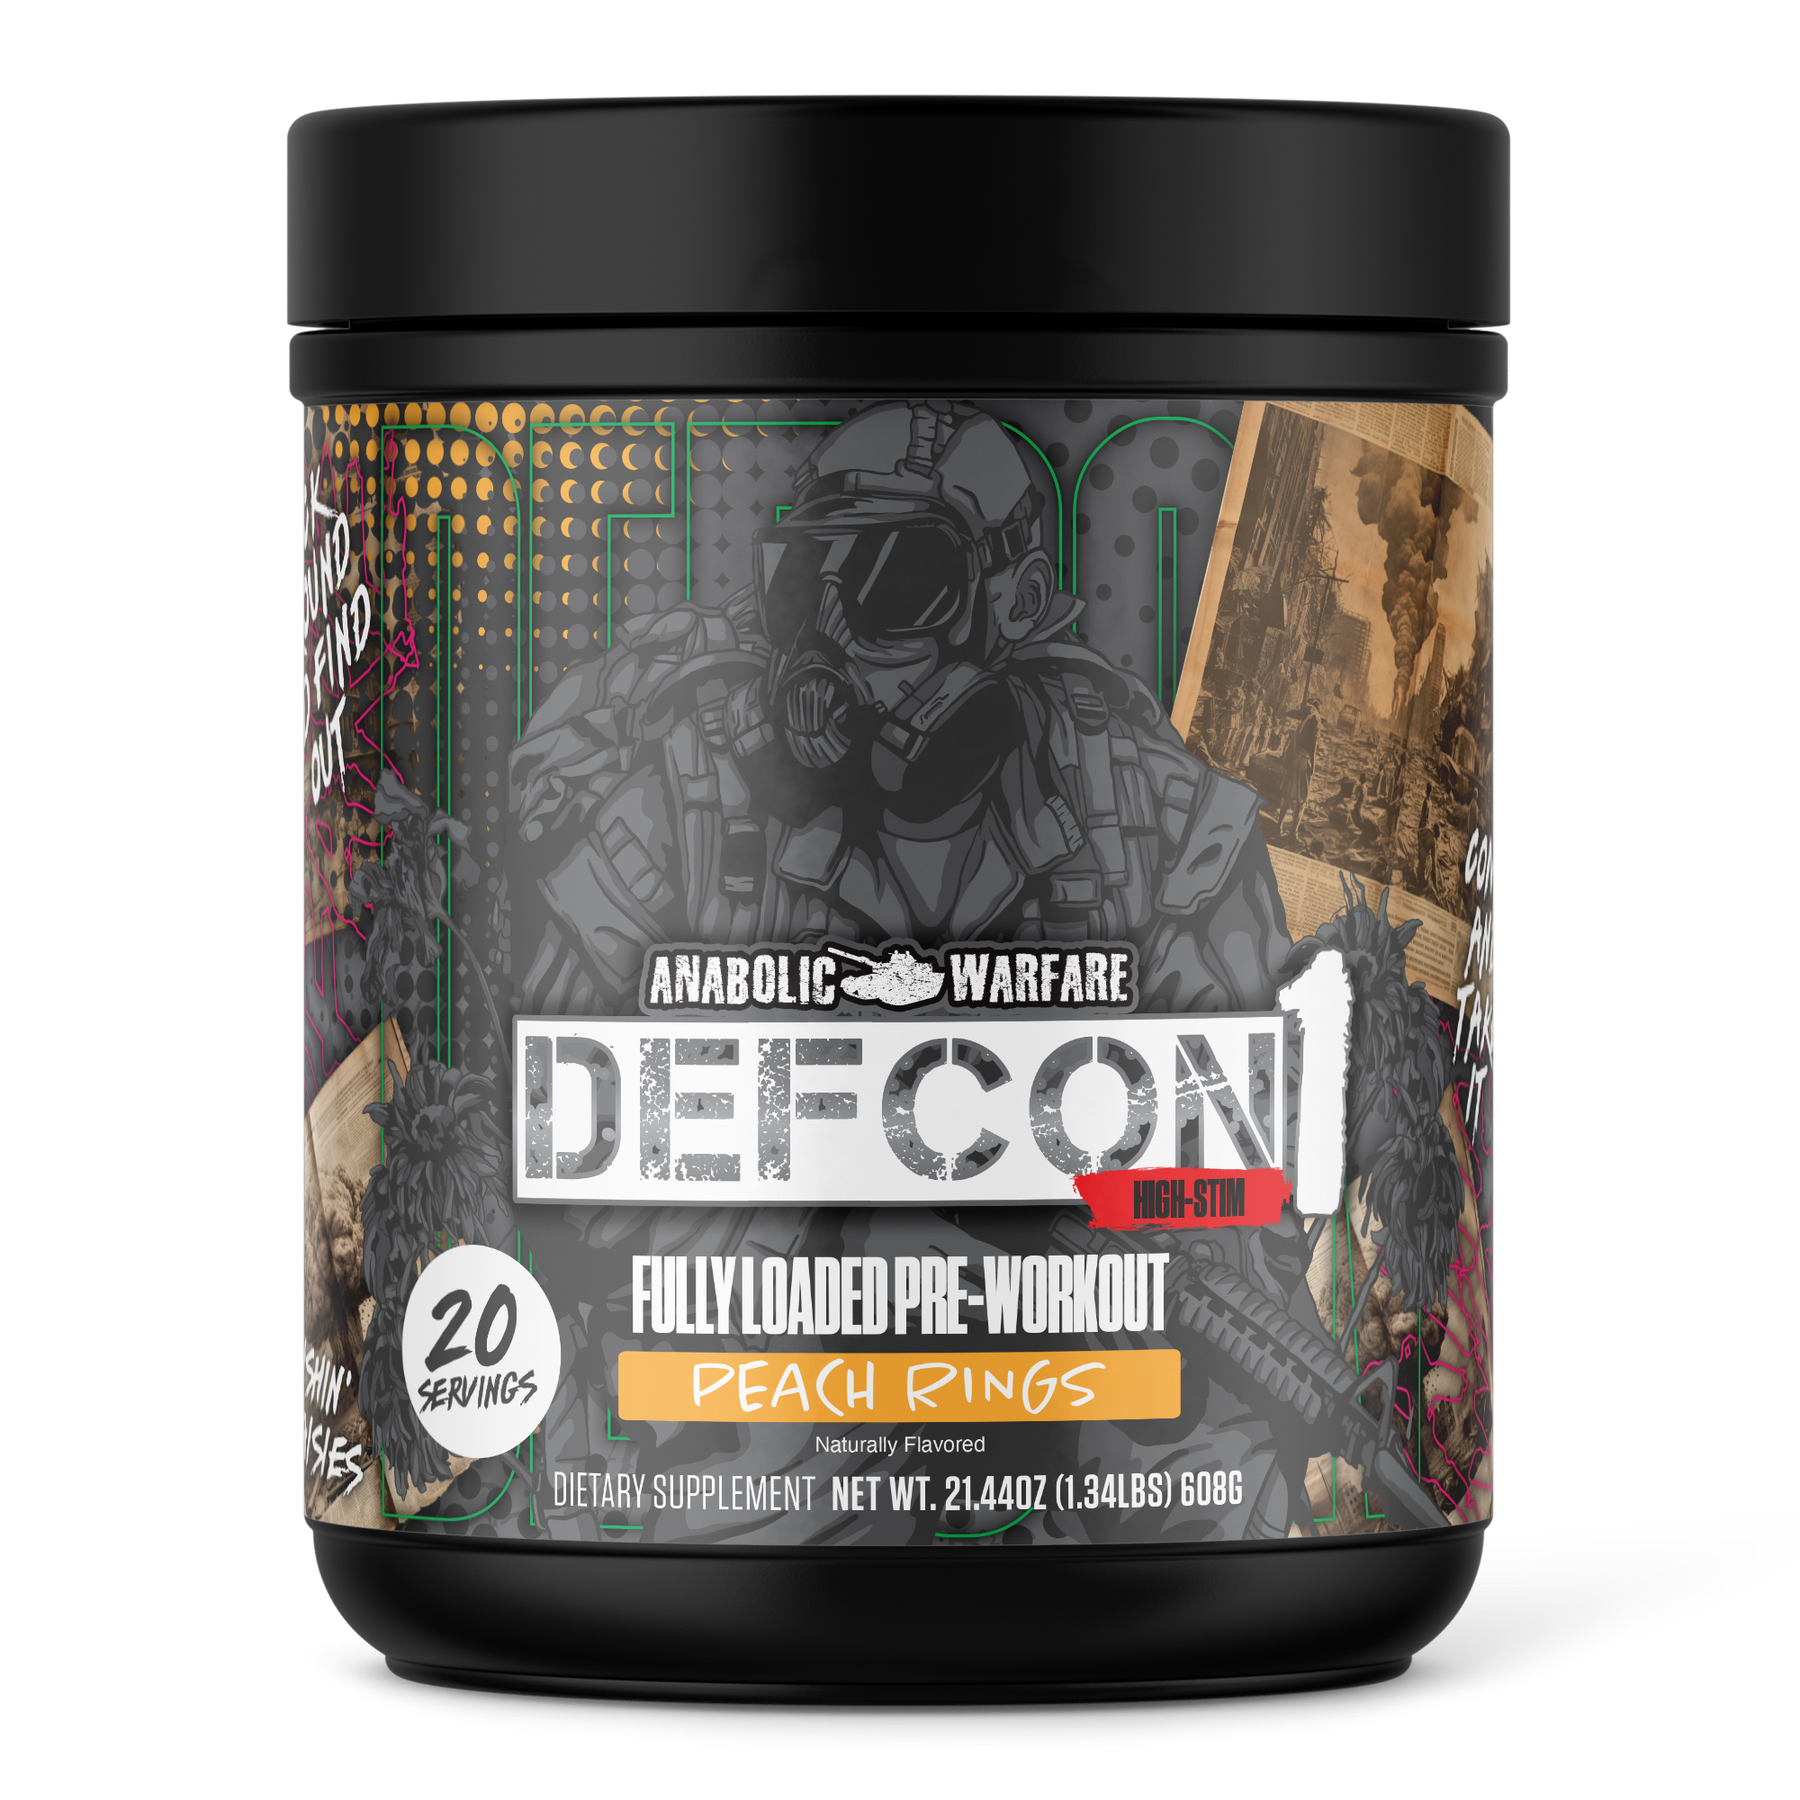 Defcon 1 Pre-workout by Anabolic Warfare